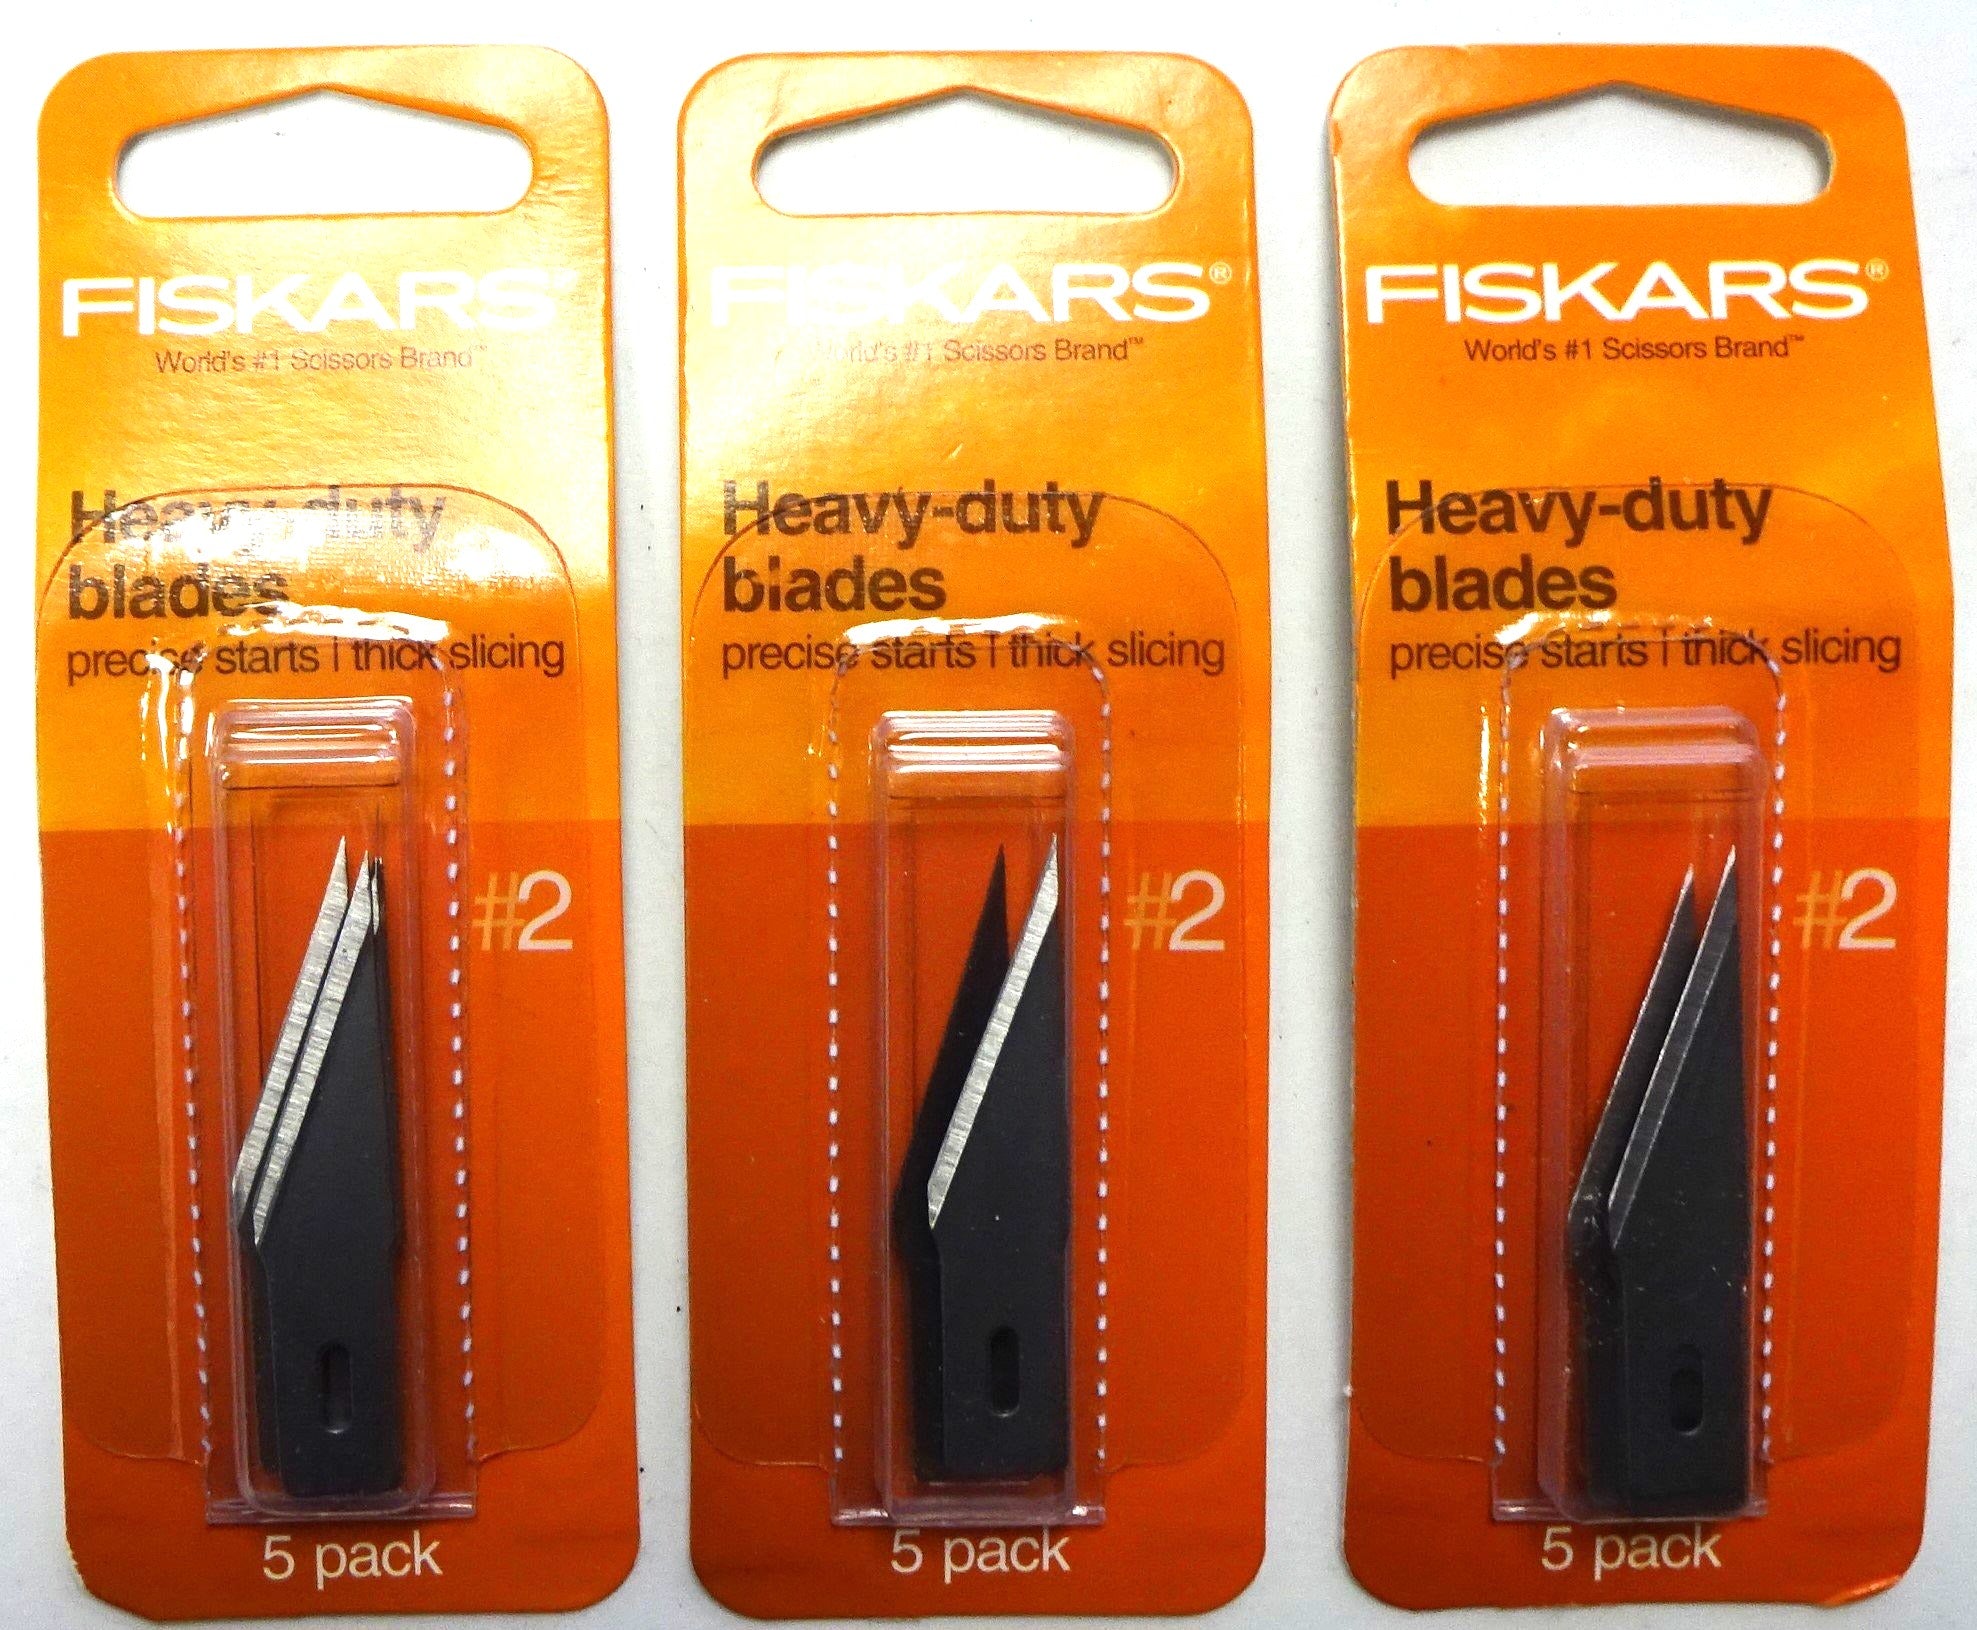 Fiskars 167000-1002 Soft Grip Detail Craft Knife 